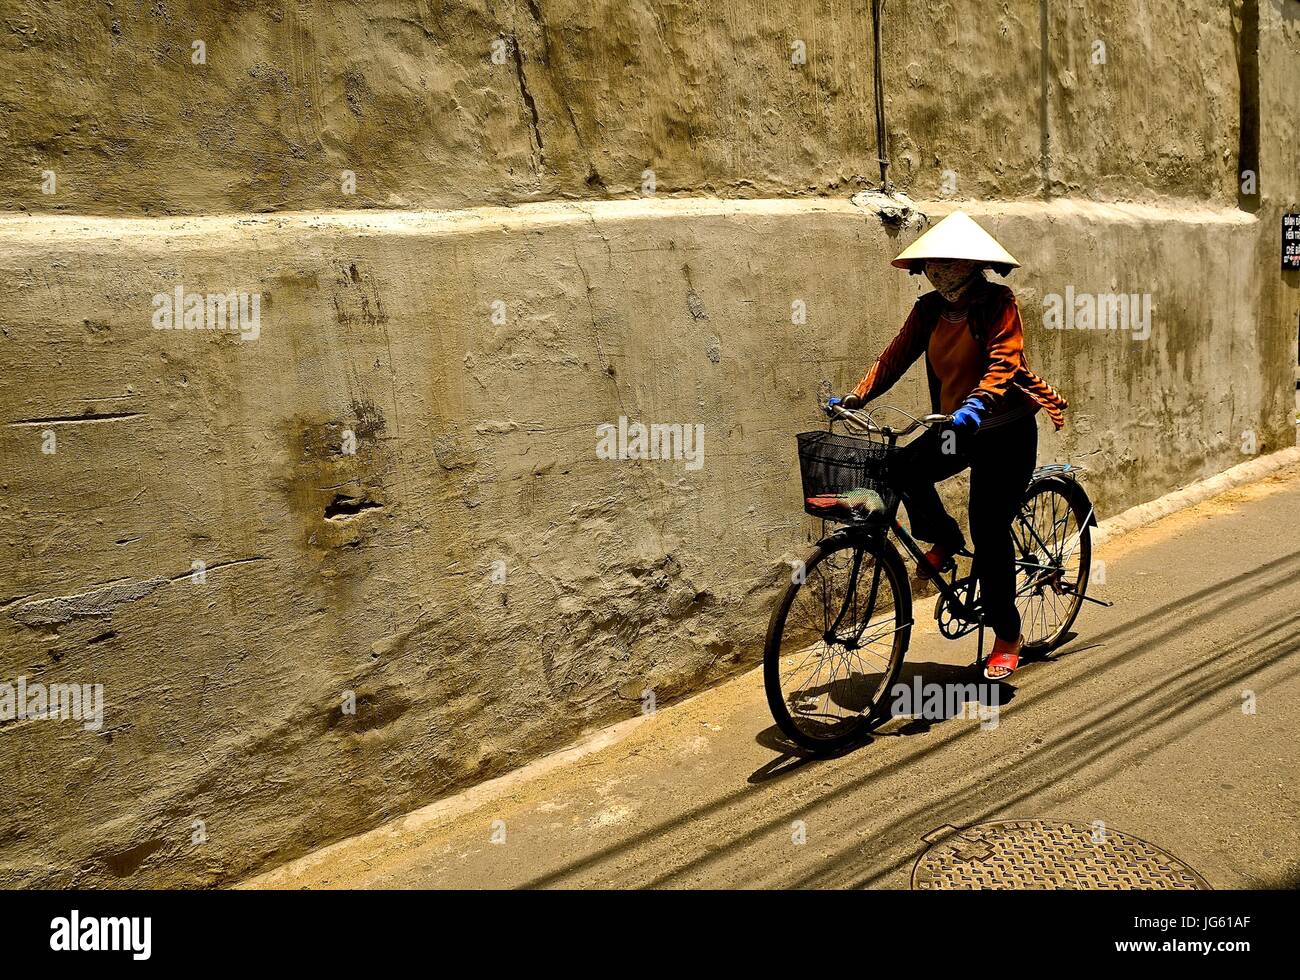 A Vietnamese woman rides a bike in a street in Hoi An, Vietnam Stock Photo